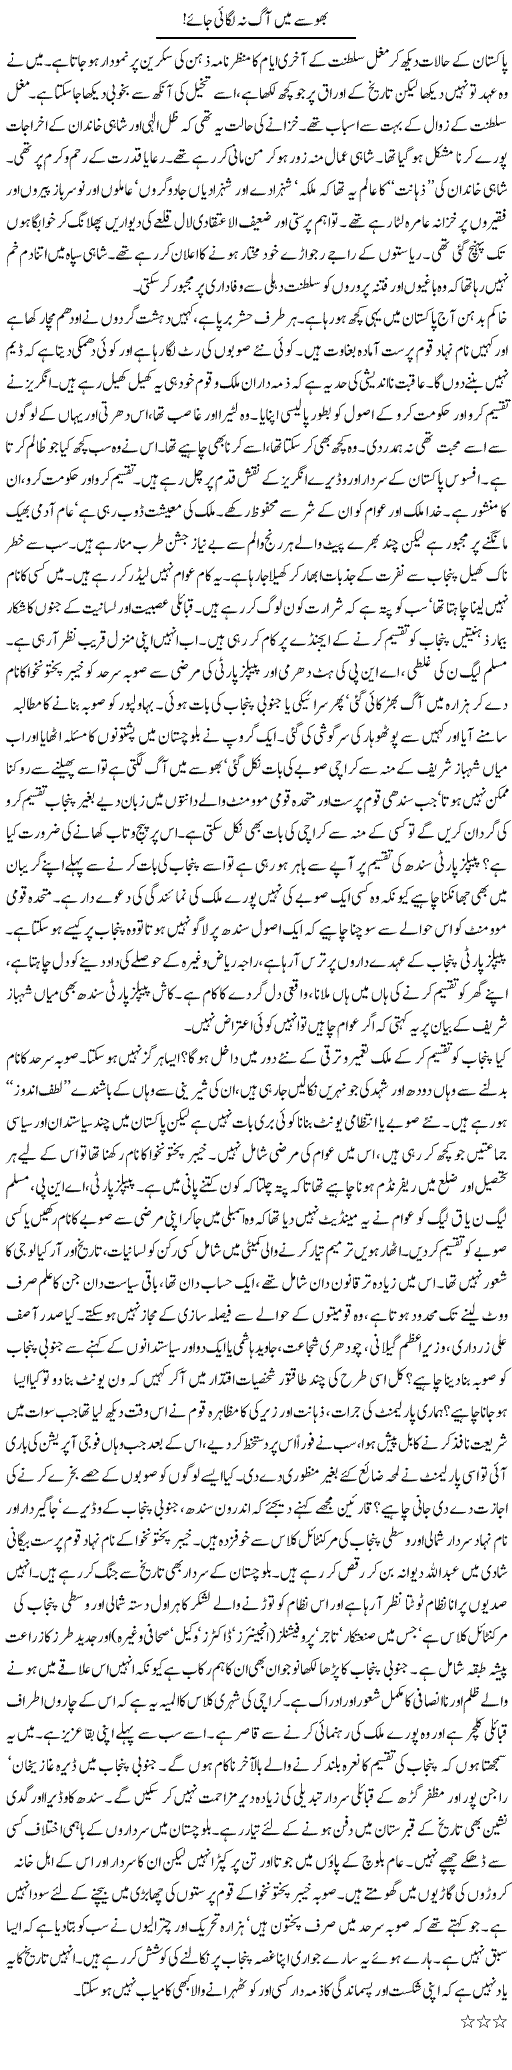 Pakistan and Last Time of Mughals Express Column Latif Chaudhry 28 April 2011